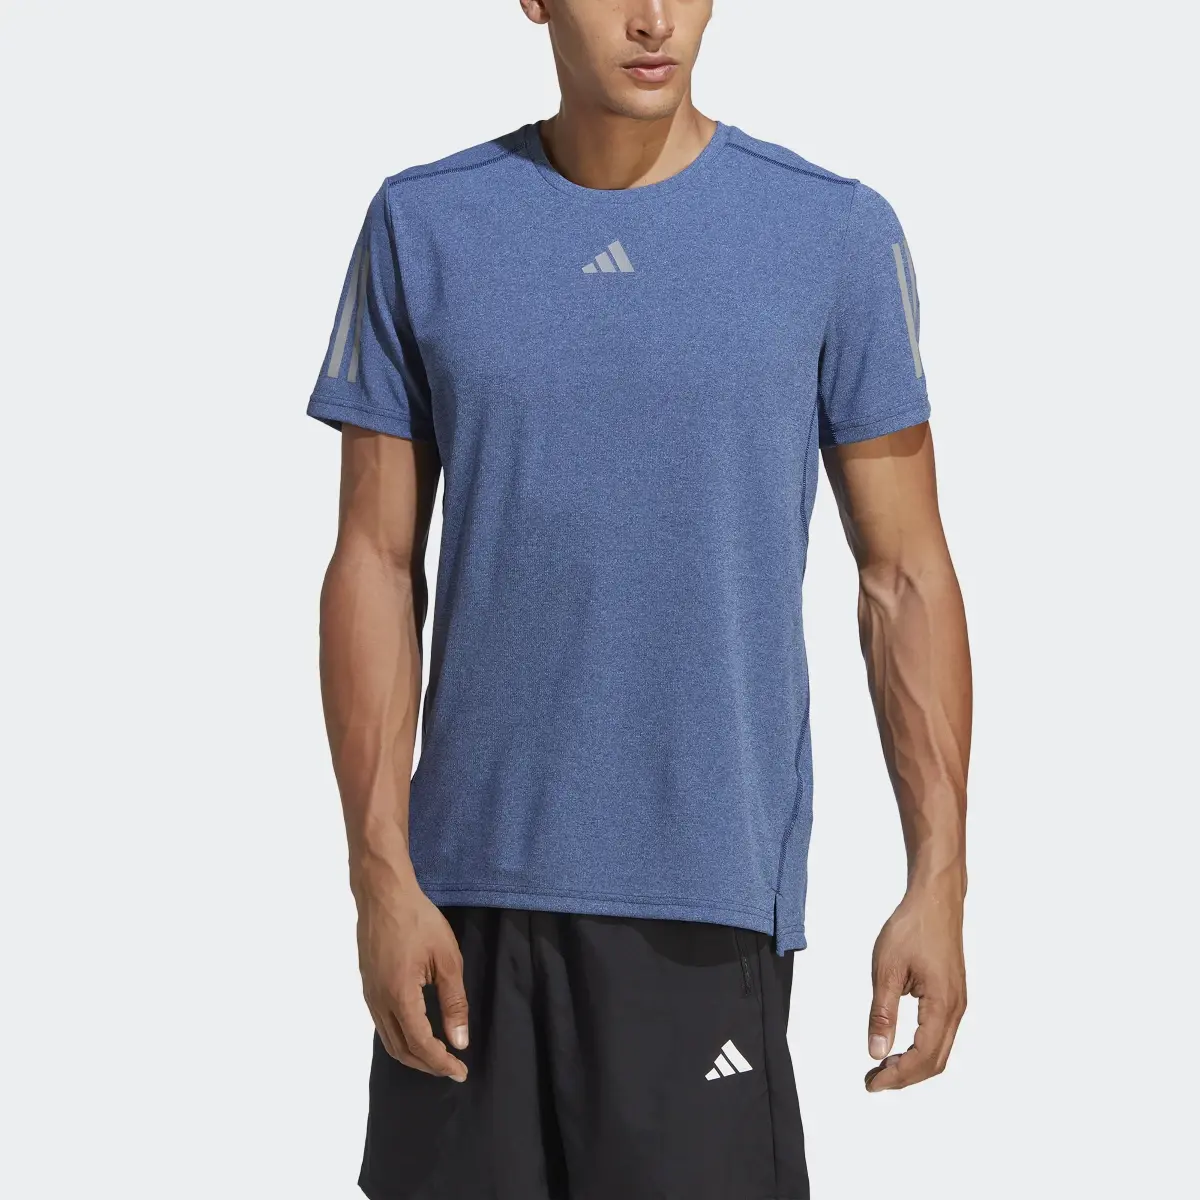 Adidas Own the Run Heather T-Shirt. 1